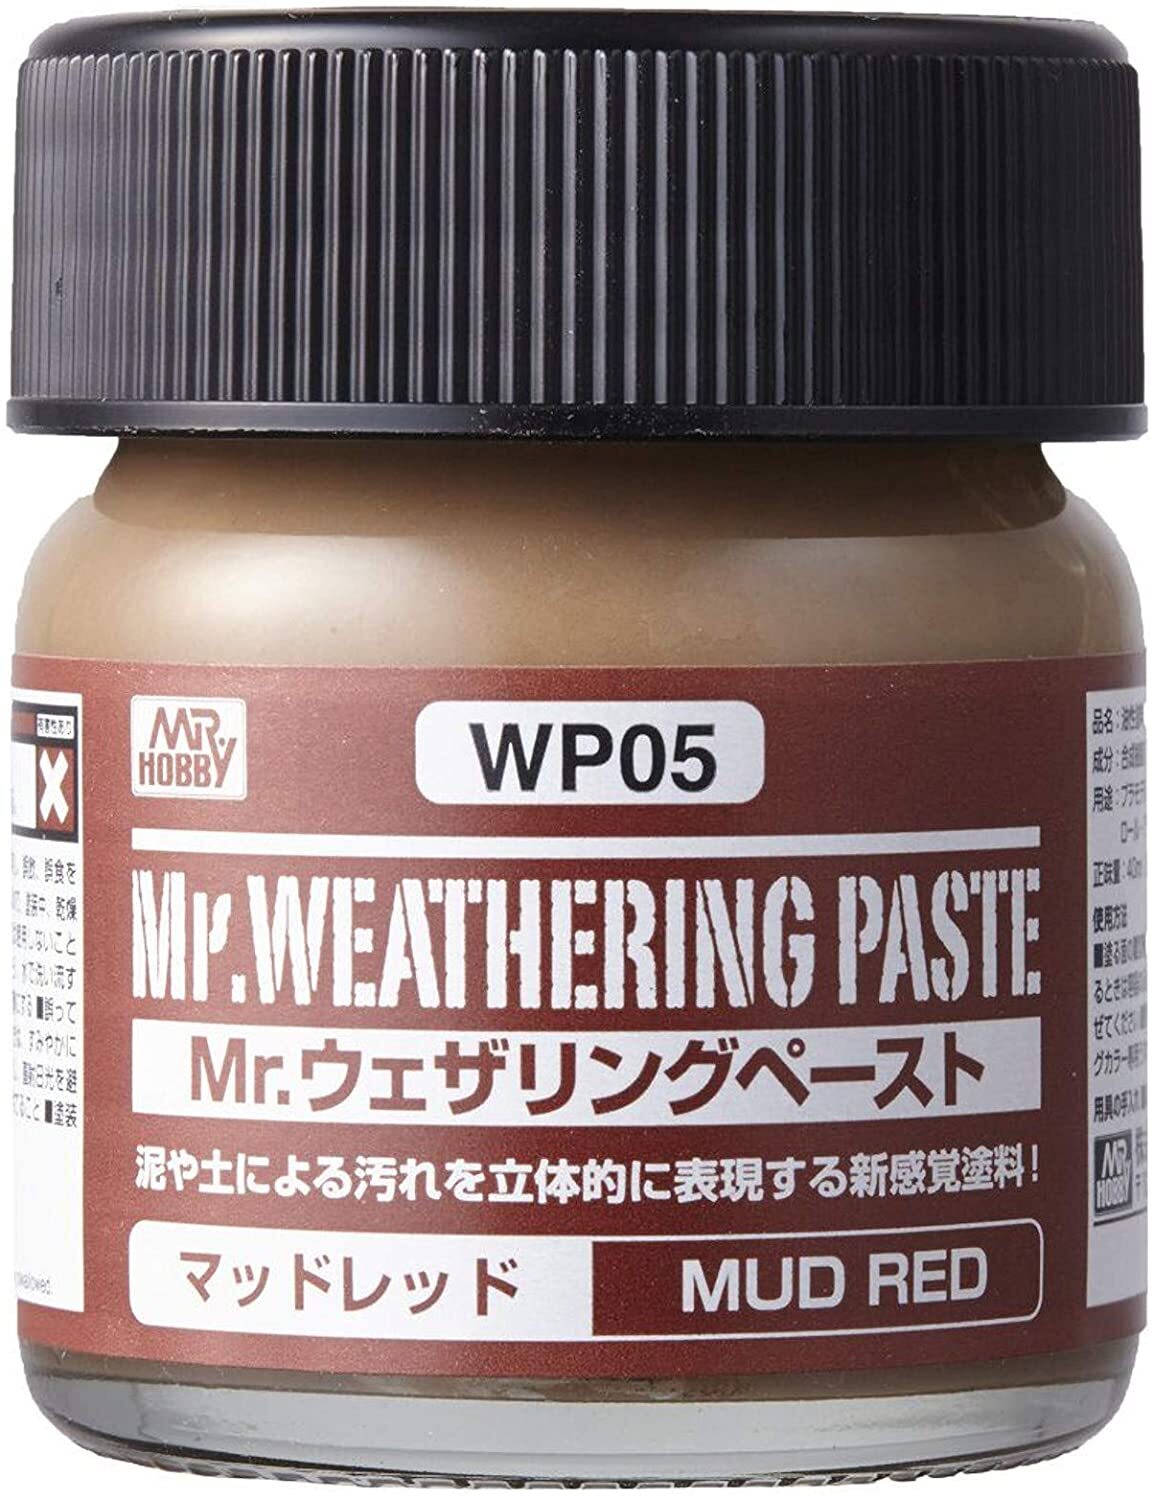 Mr Weathering Paste Mud Red